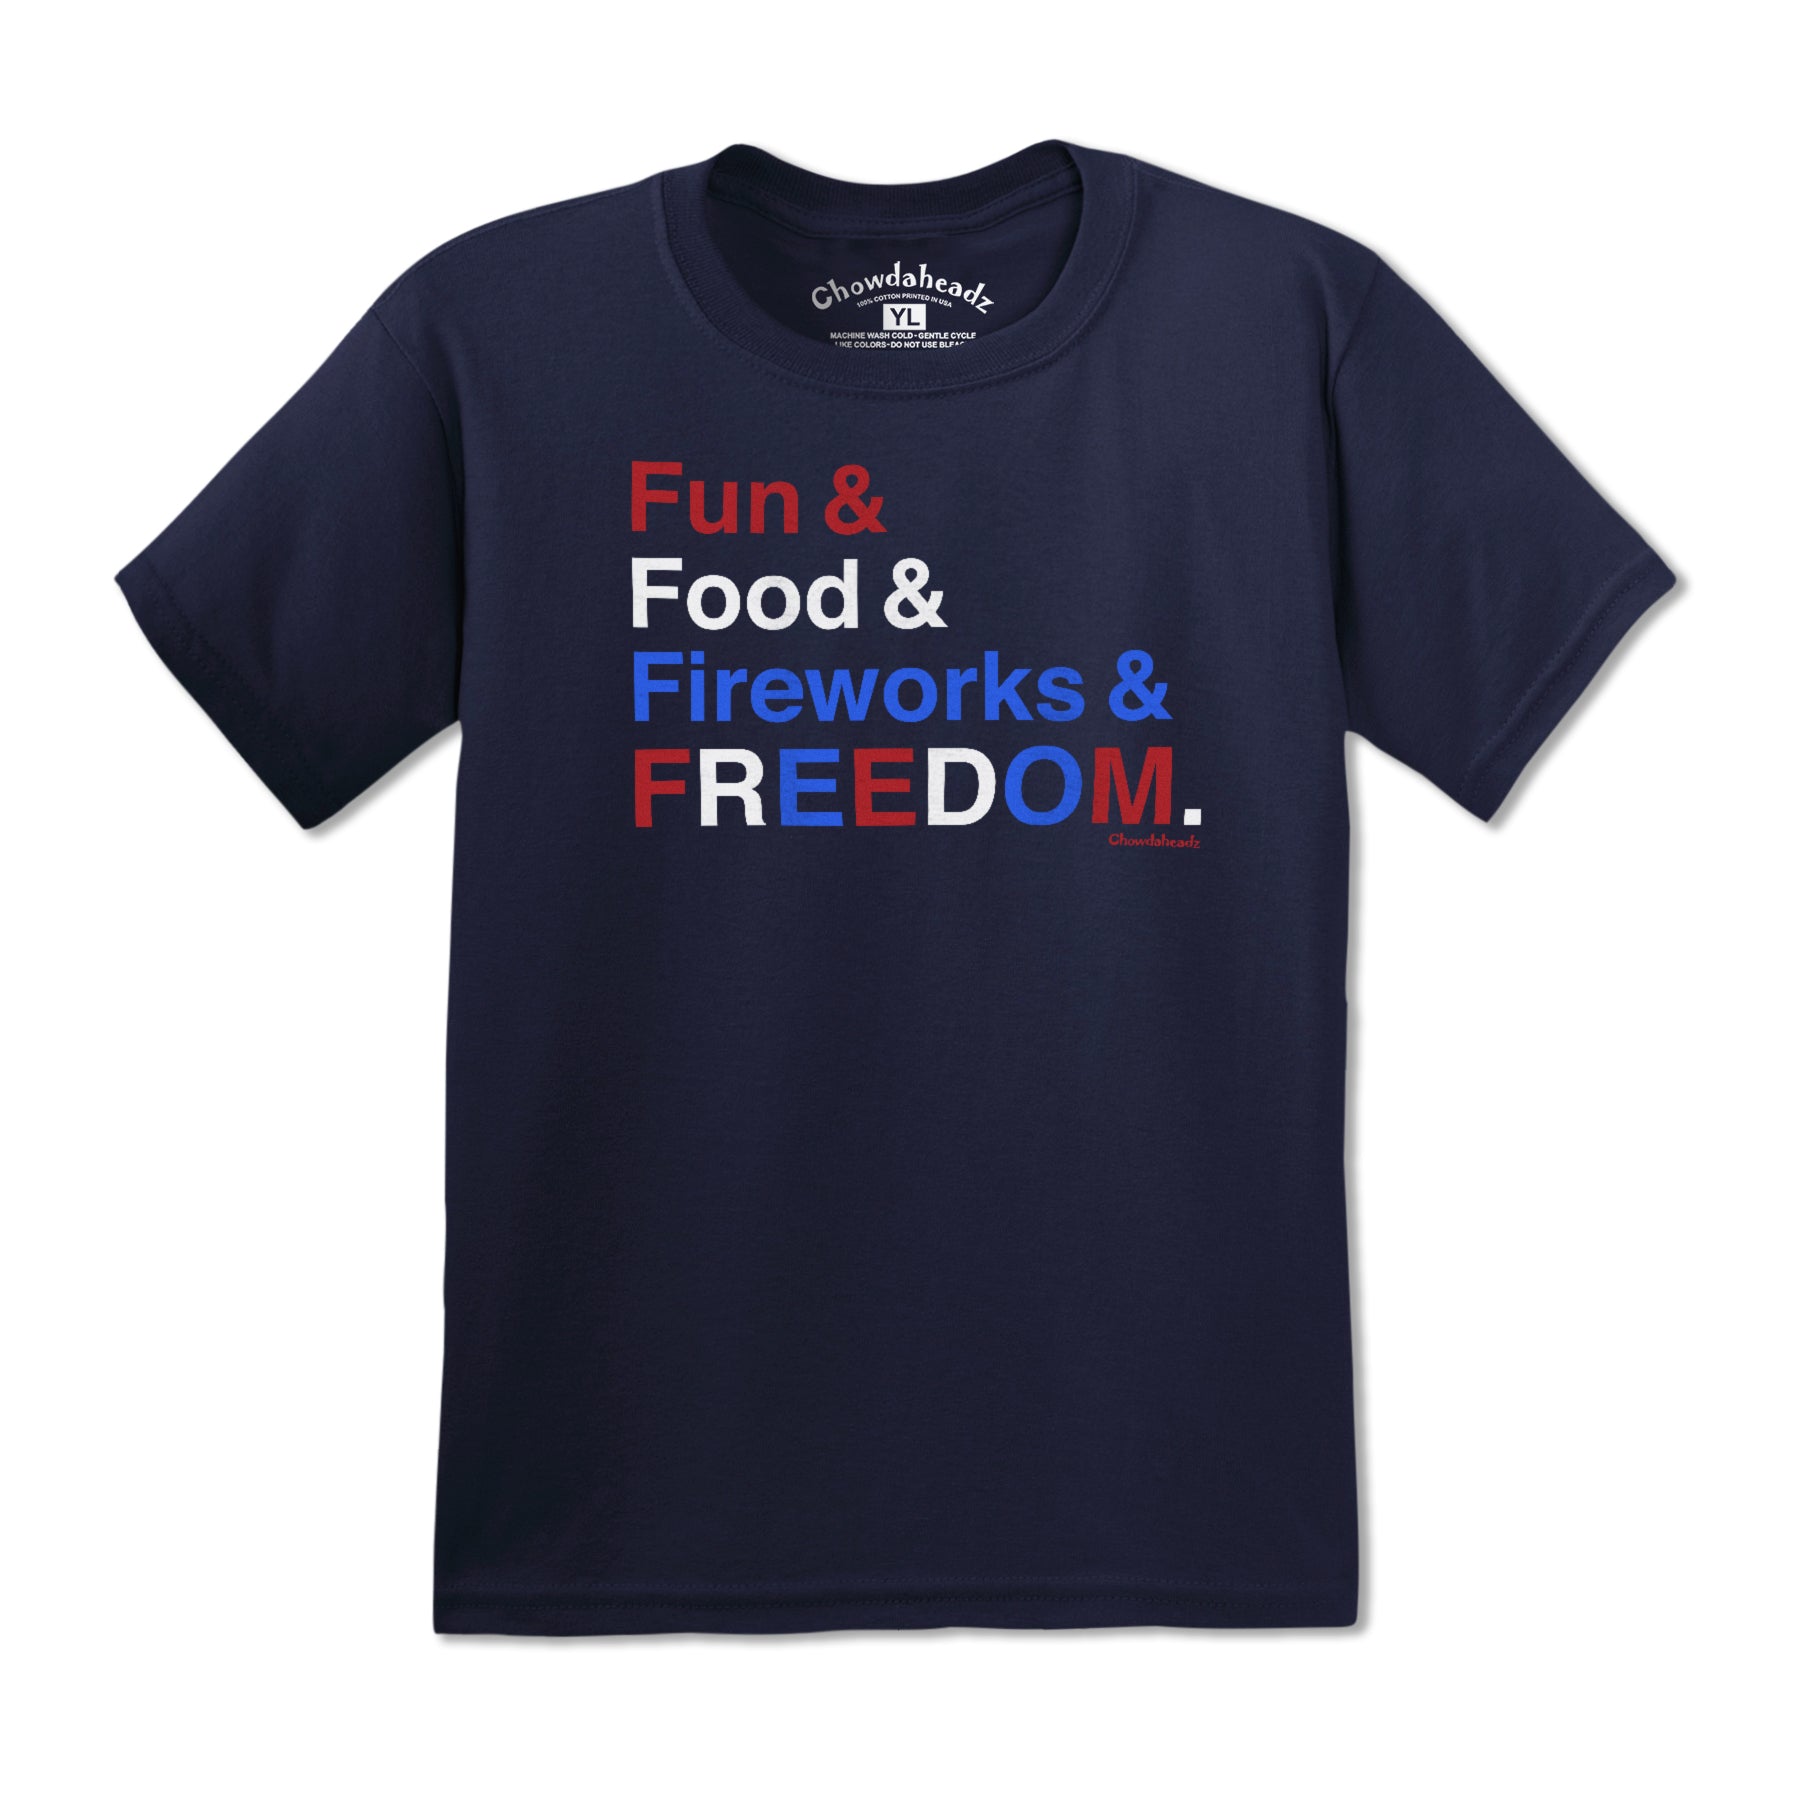 Fun & Food & Fireworks & Freedom Youth T-Shirt - Chowdaheadz